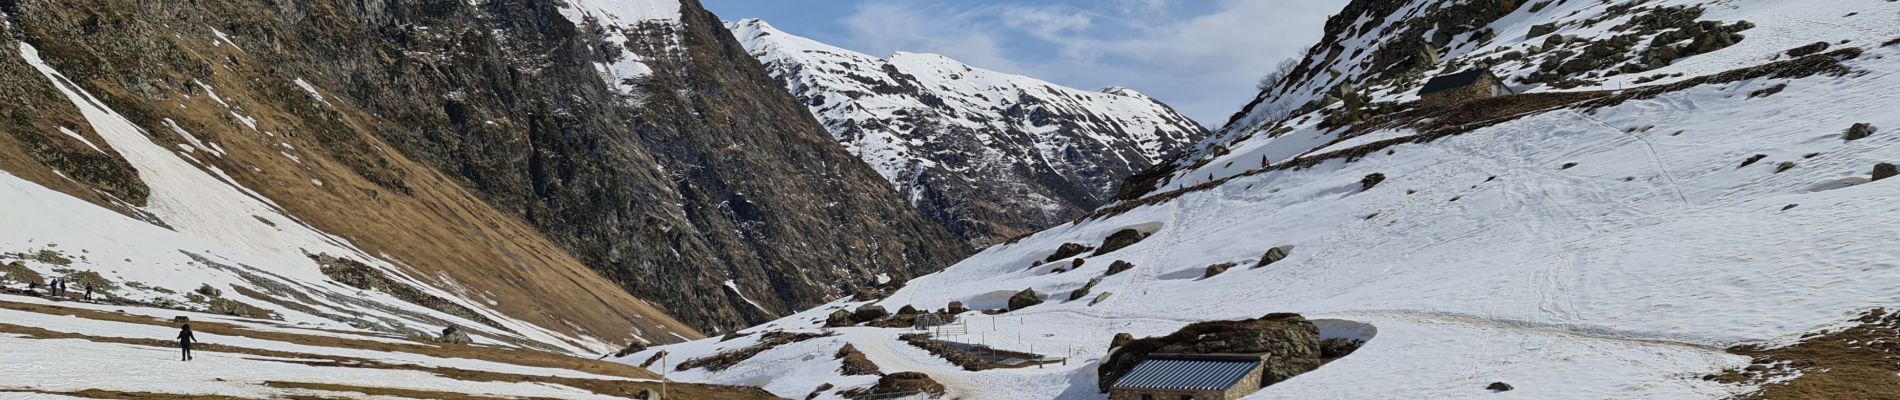 Tocht Sneeuwschoenen Aragnouet - Piau-Engaly: Neste de Badet, lac de Badet A/R - Photo